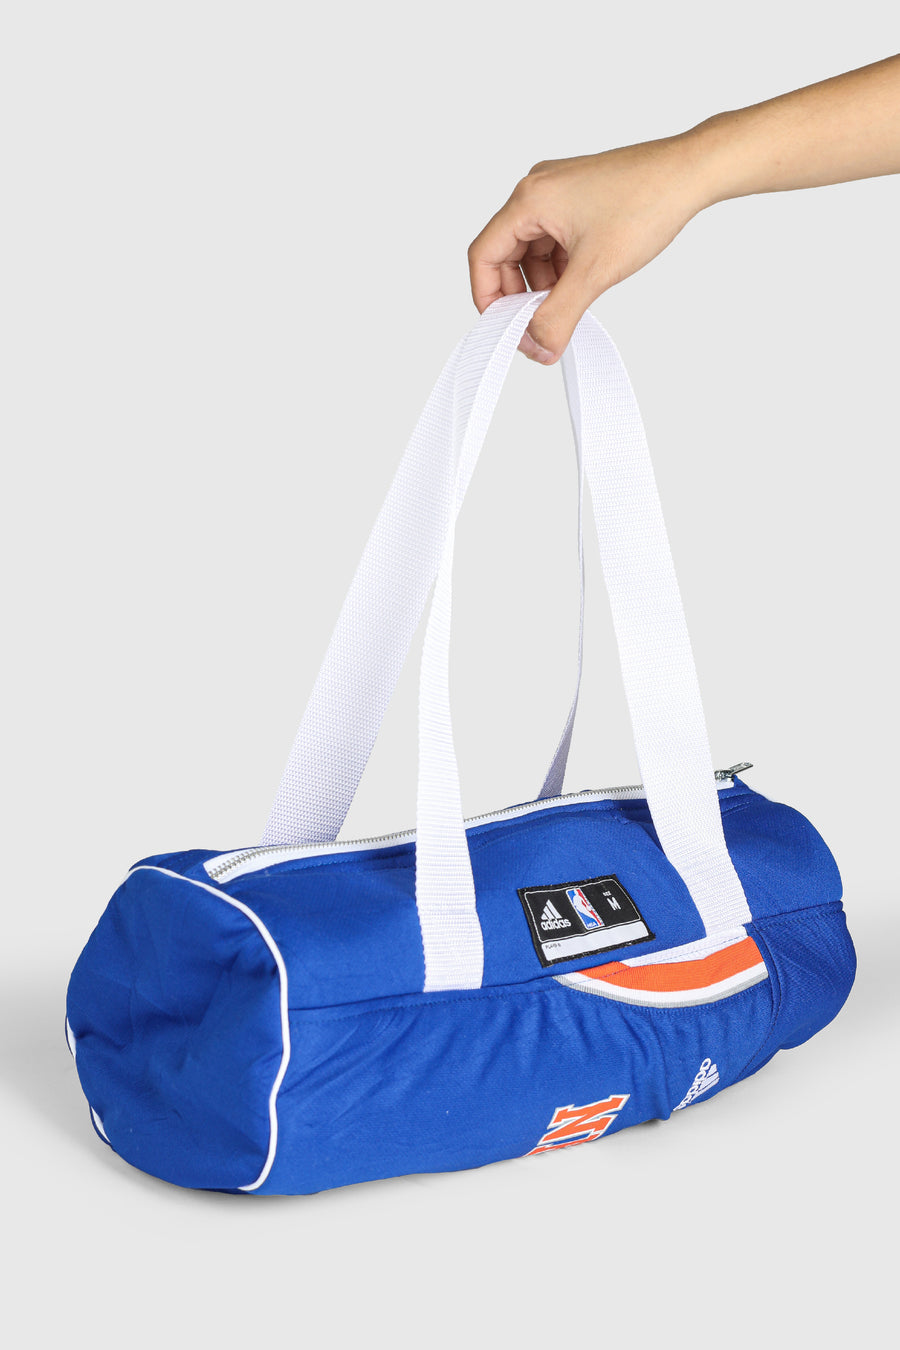 Rework Knicks NBA Duffle Bag